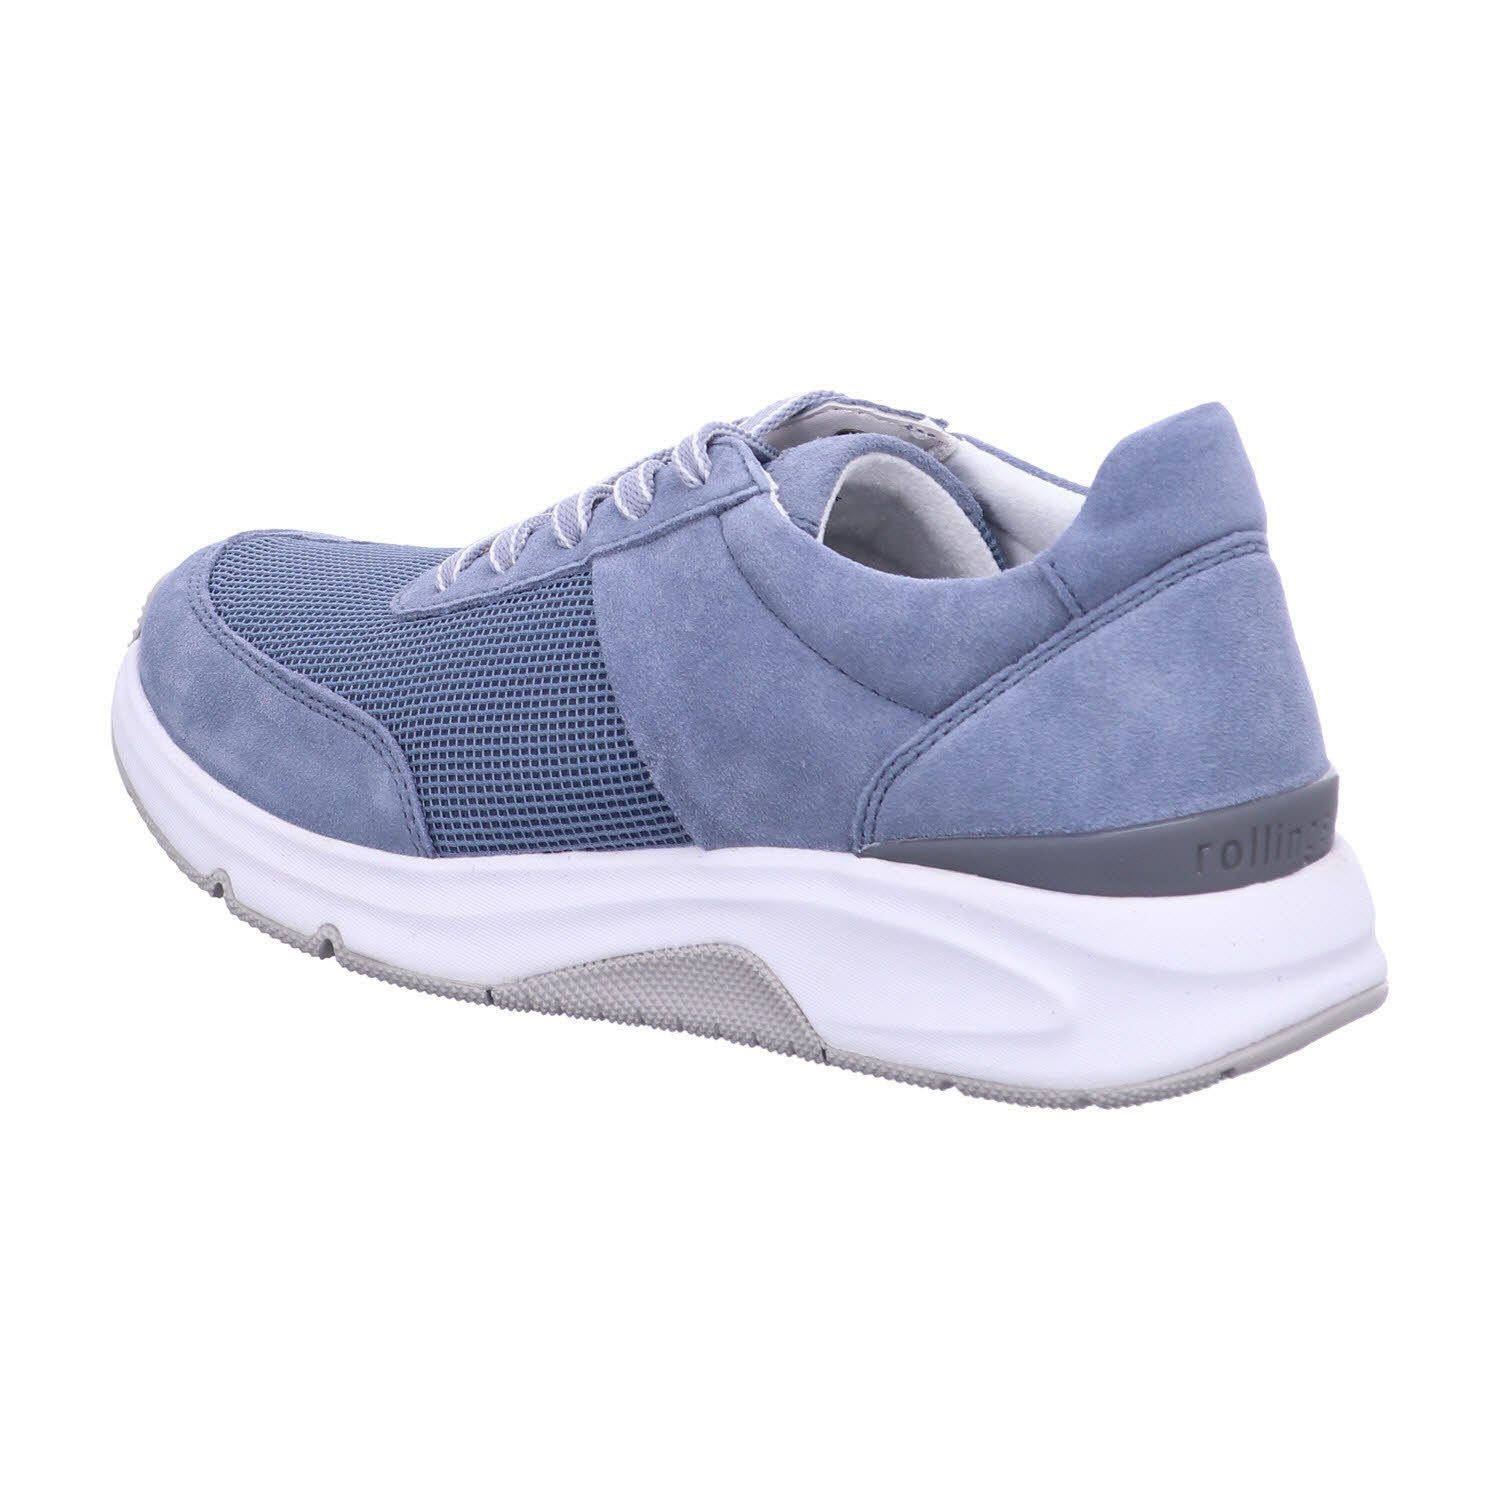 Gabor Sneaker (nautic) Blau